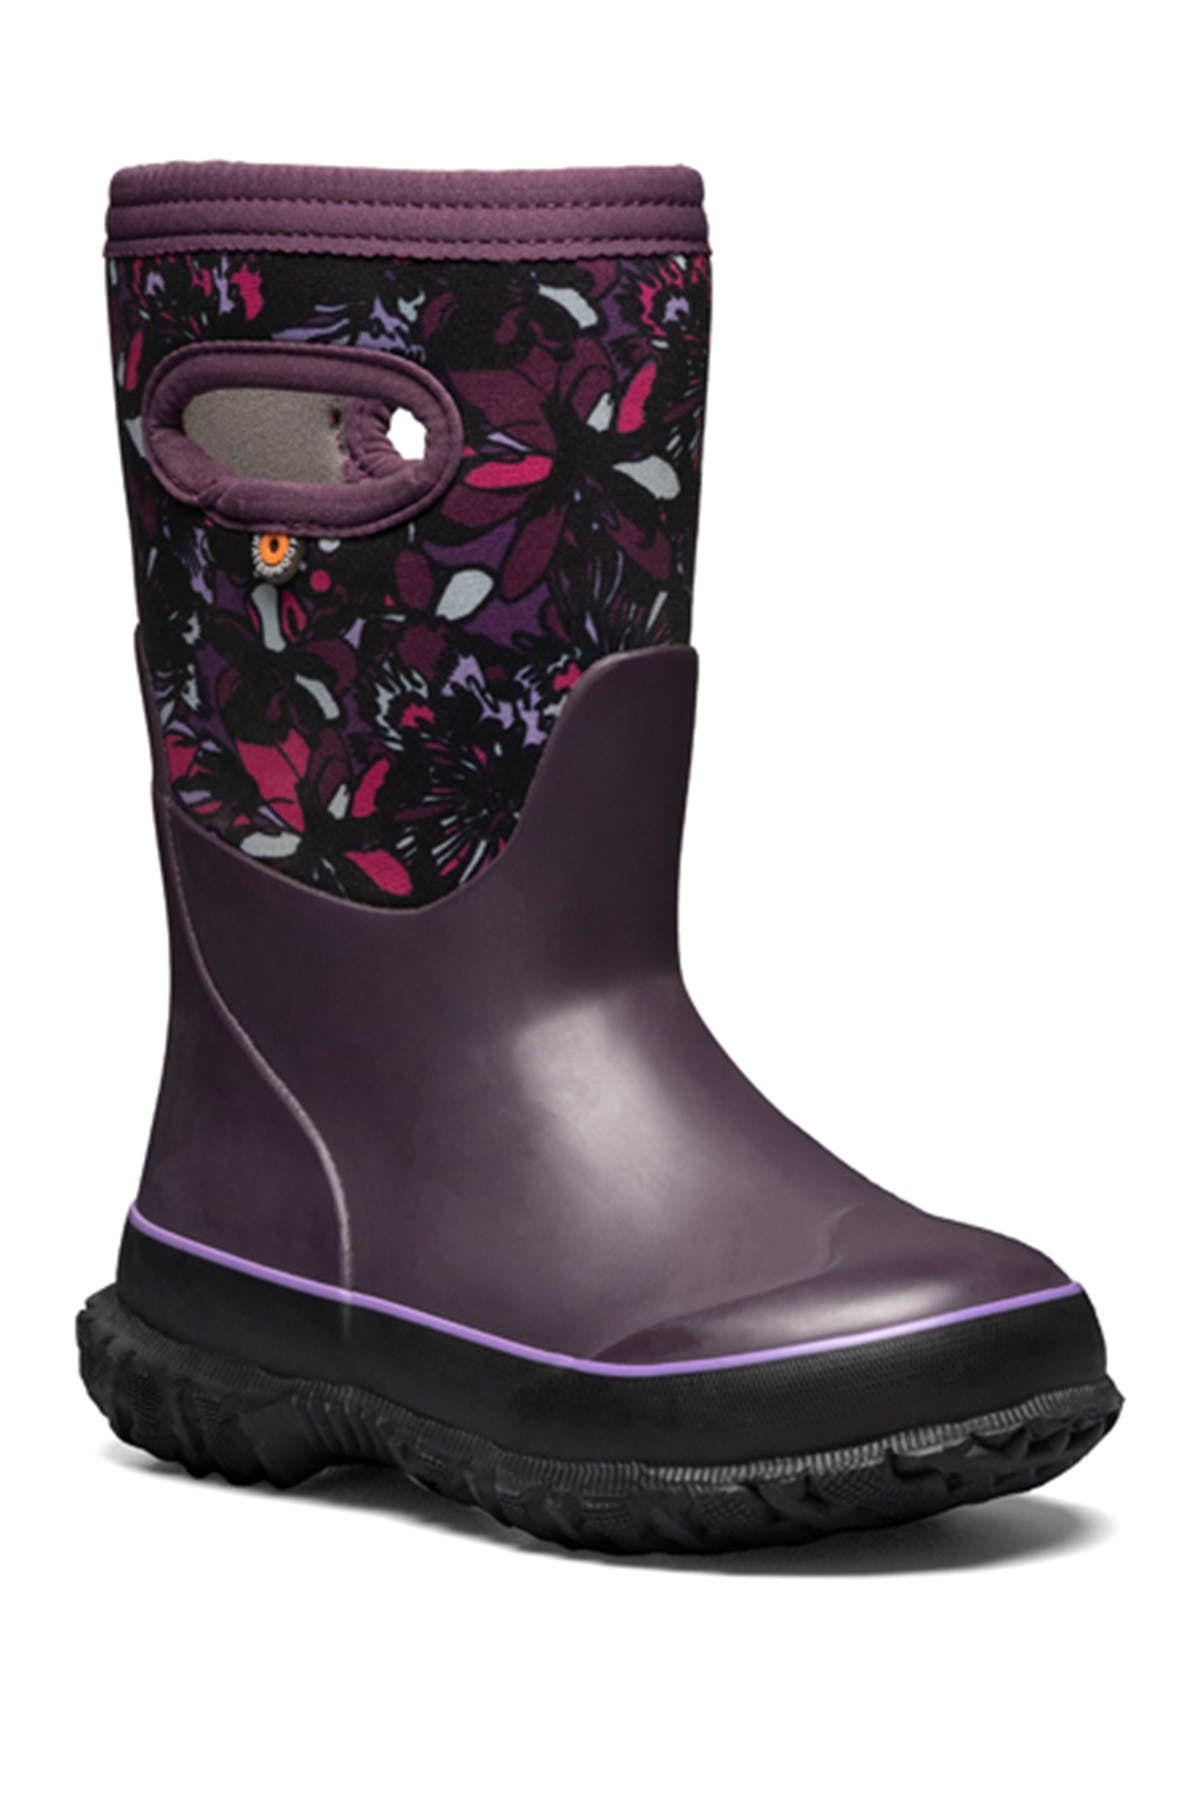 bogs girls boots